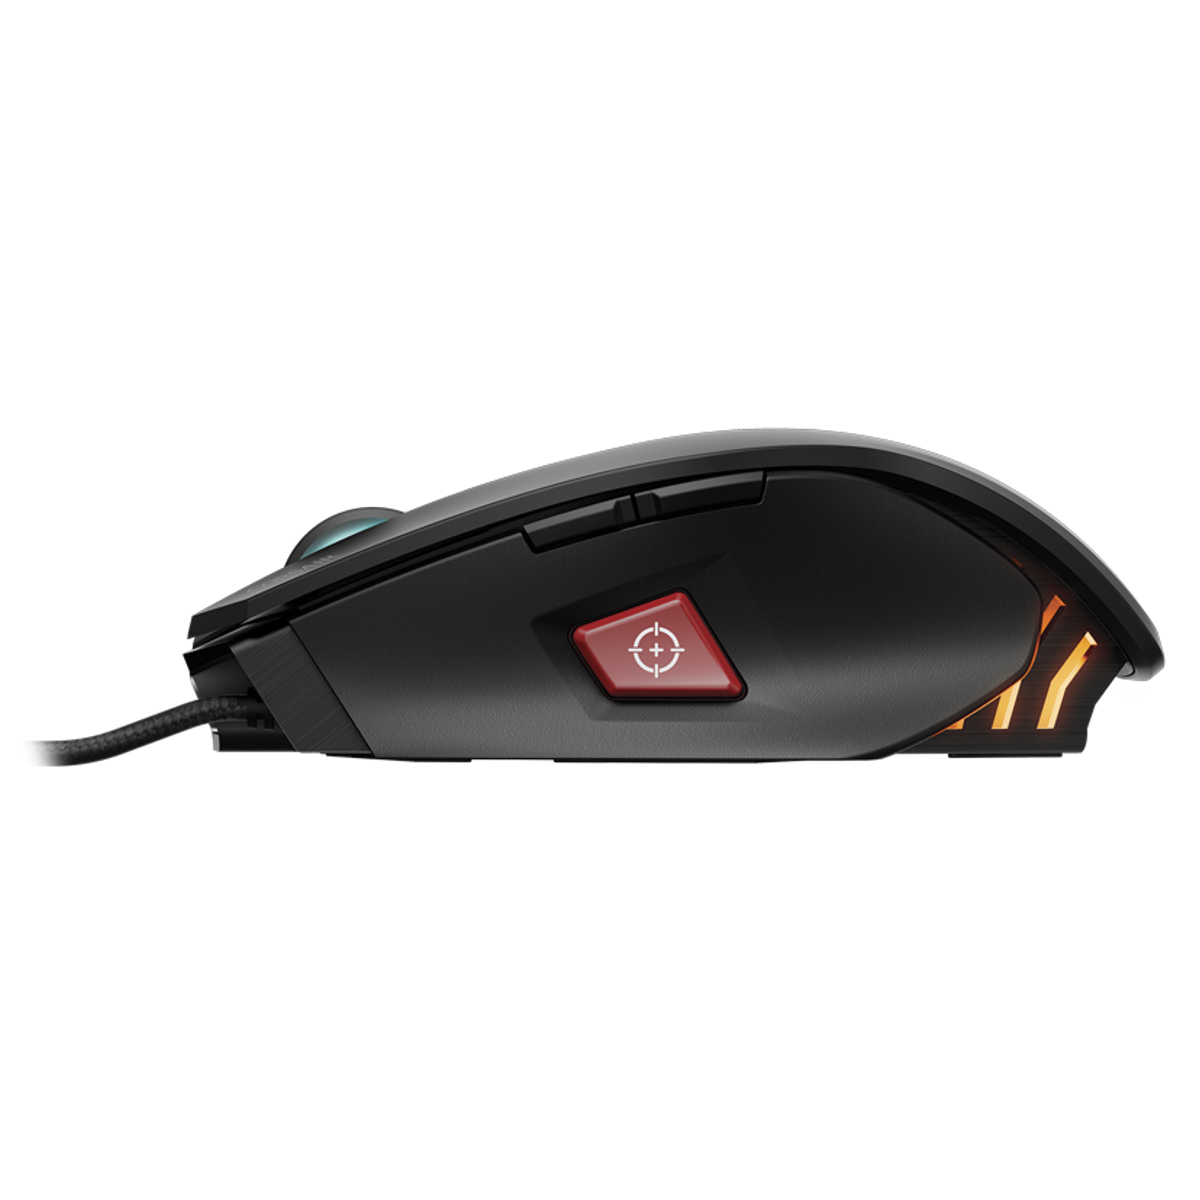 CORSAIR - Corsair Gaming M65 PRO RGB FPS Gaming Mouse Backlit RGB LED 12000 DPI Optical Black (CH-9300011-EU)